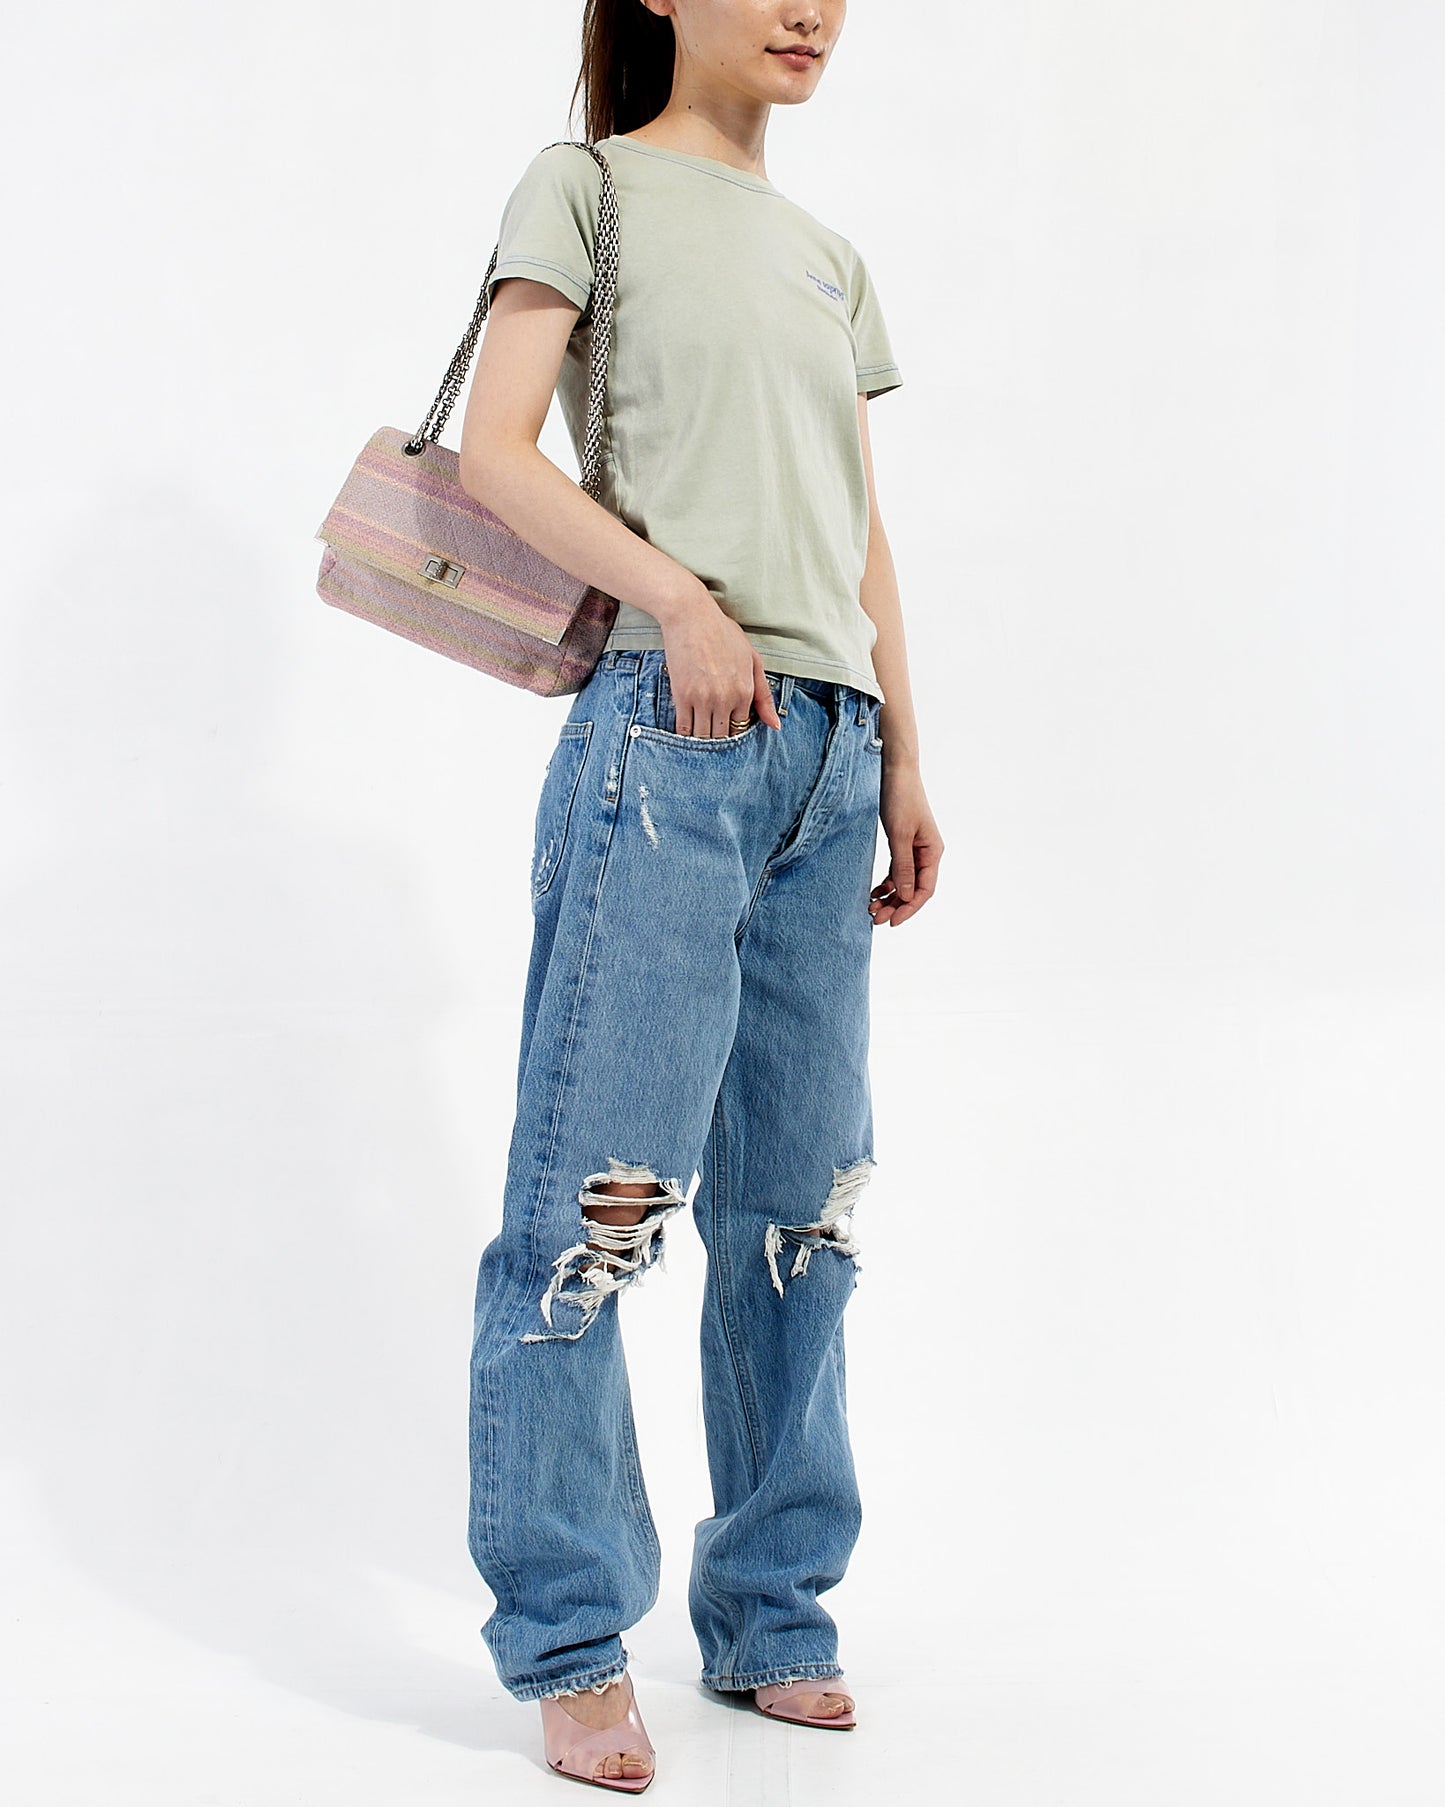 Chanel Multi Knit Reissue Small Single Flap Bag